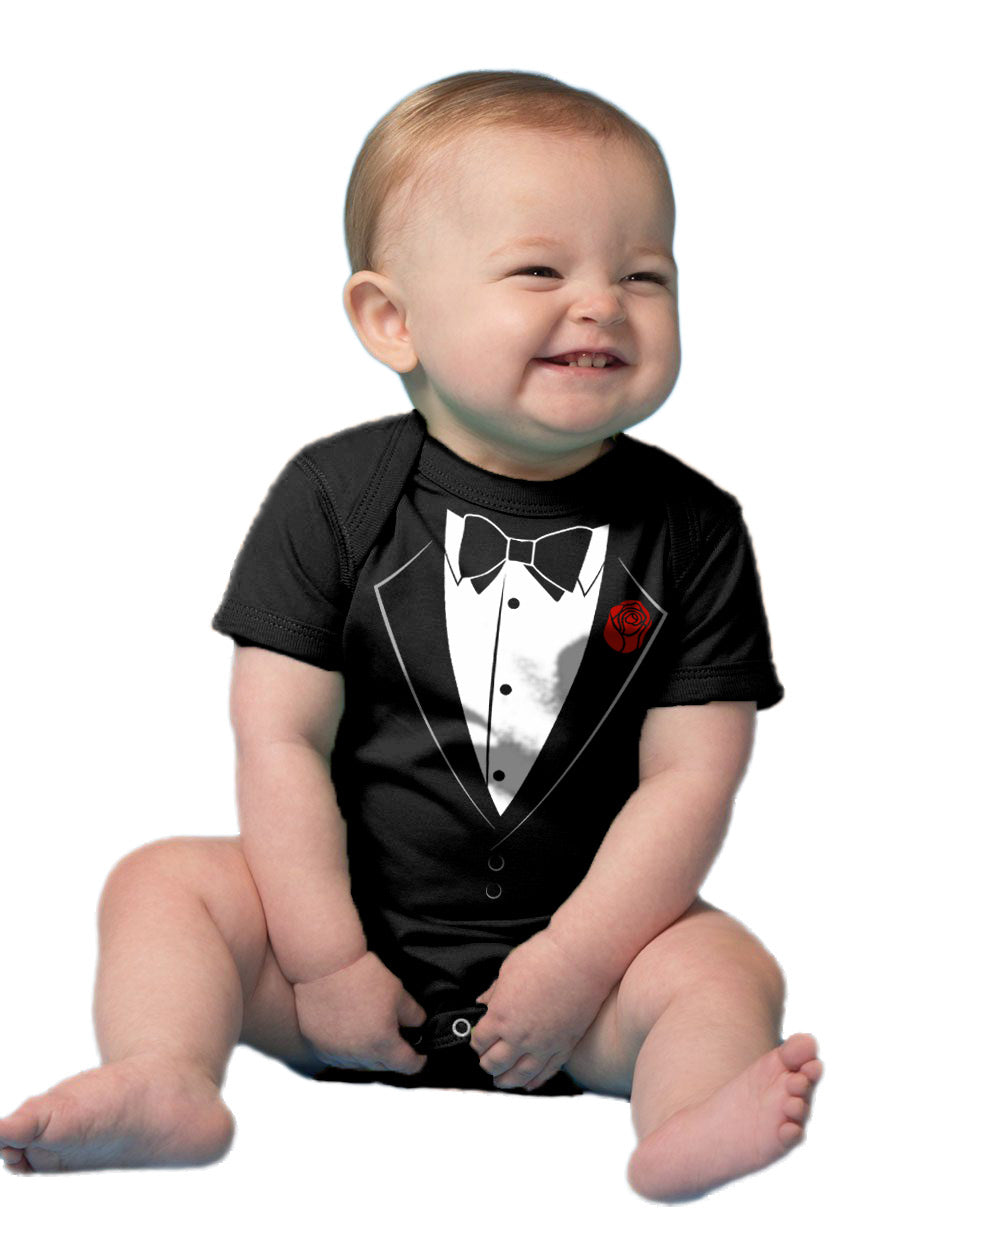 Ann Arbor T-shirt Co. Unisex Baby "Tuxedo Baby" Funny Infant Humor One Piece